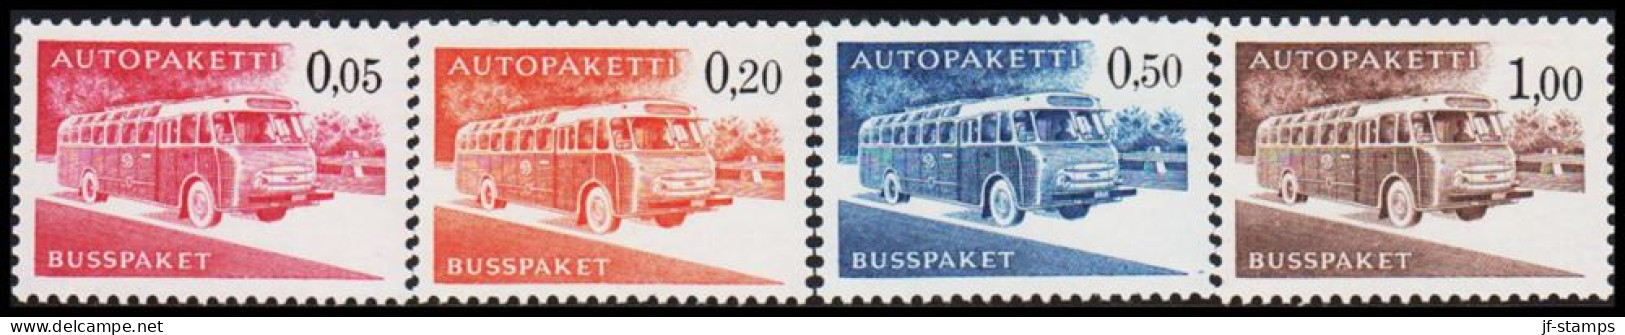 1963-1980. FINLAND. Mail Bus. Complete Set AUTOPAKETTI - BUSSPAKET Never Hinged. Normal... (Michel AP 10-13x) - JF535612 - Envios Por Bus